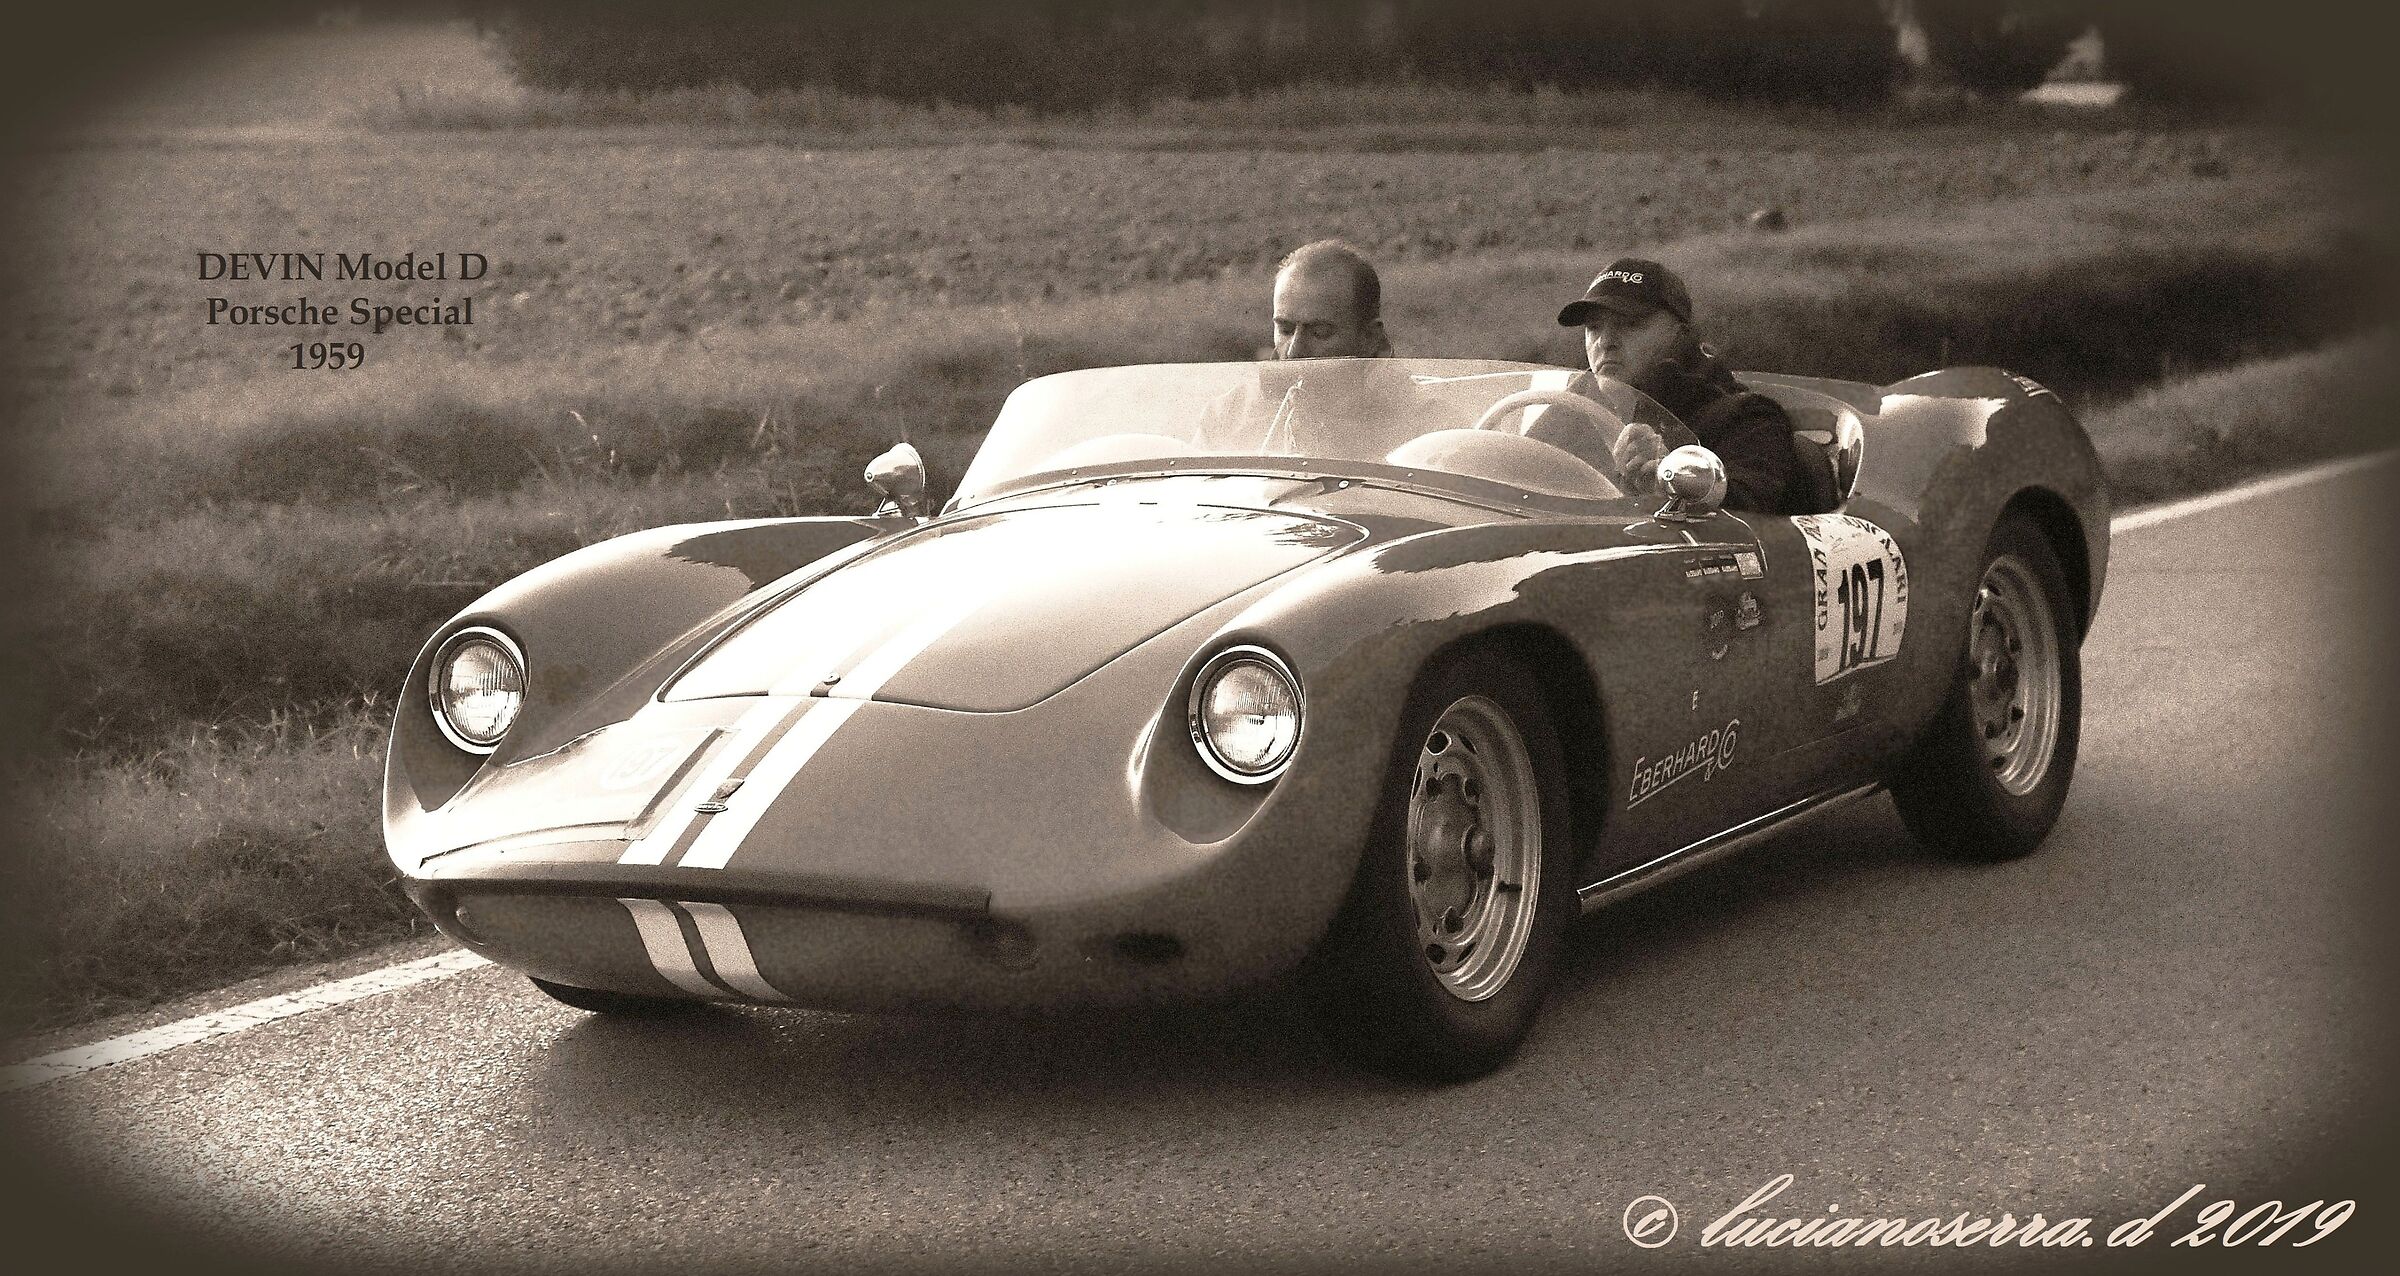 Devin Model D Porsche Special - 1959...